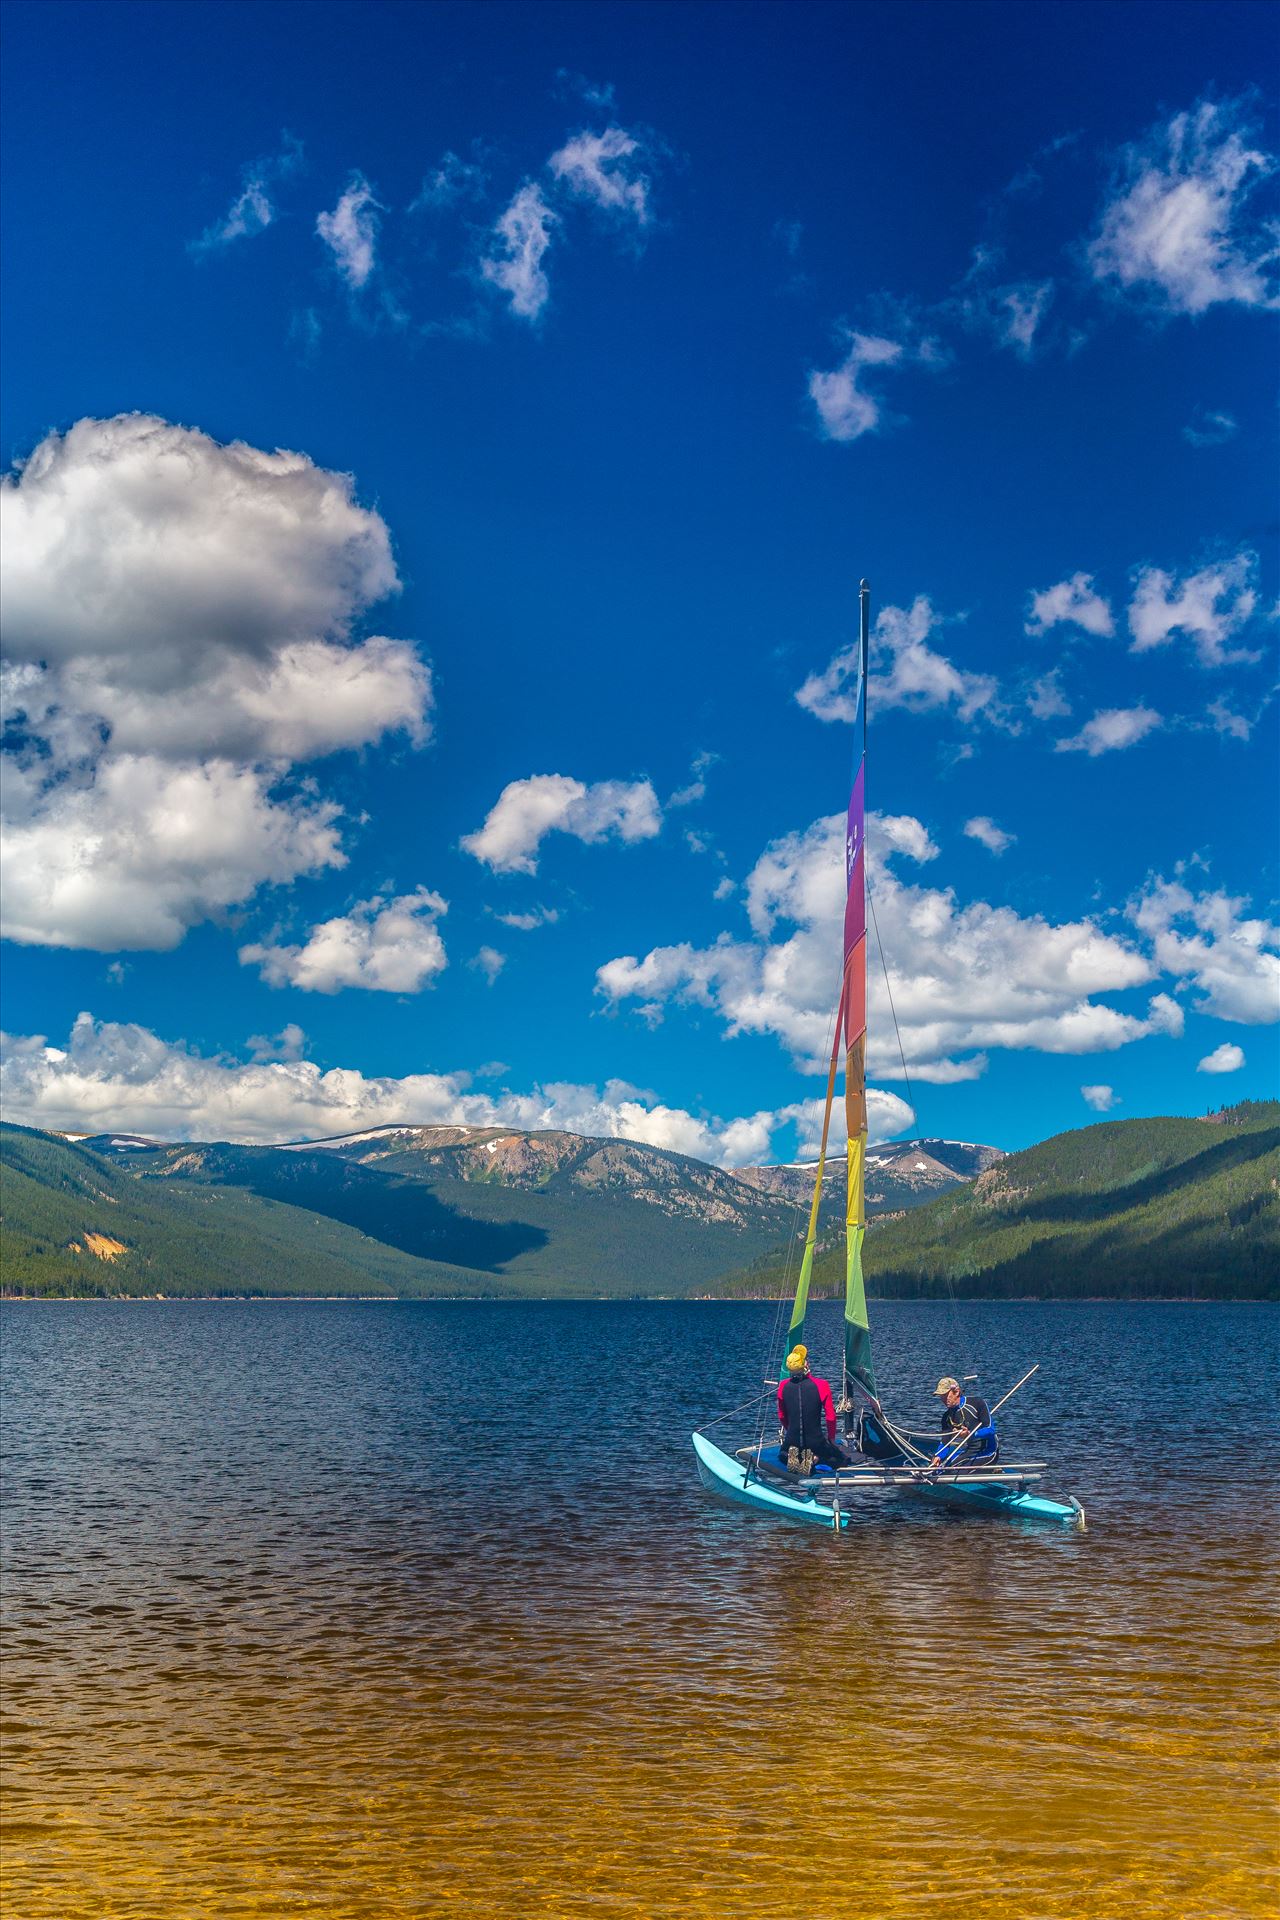 Sailing at Turquoise Lake - Sailing at Turqouise Lake, Leadville, Colorado. by Scott Smith Photos